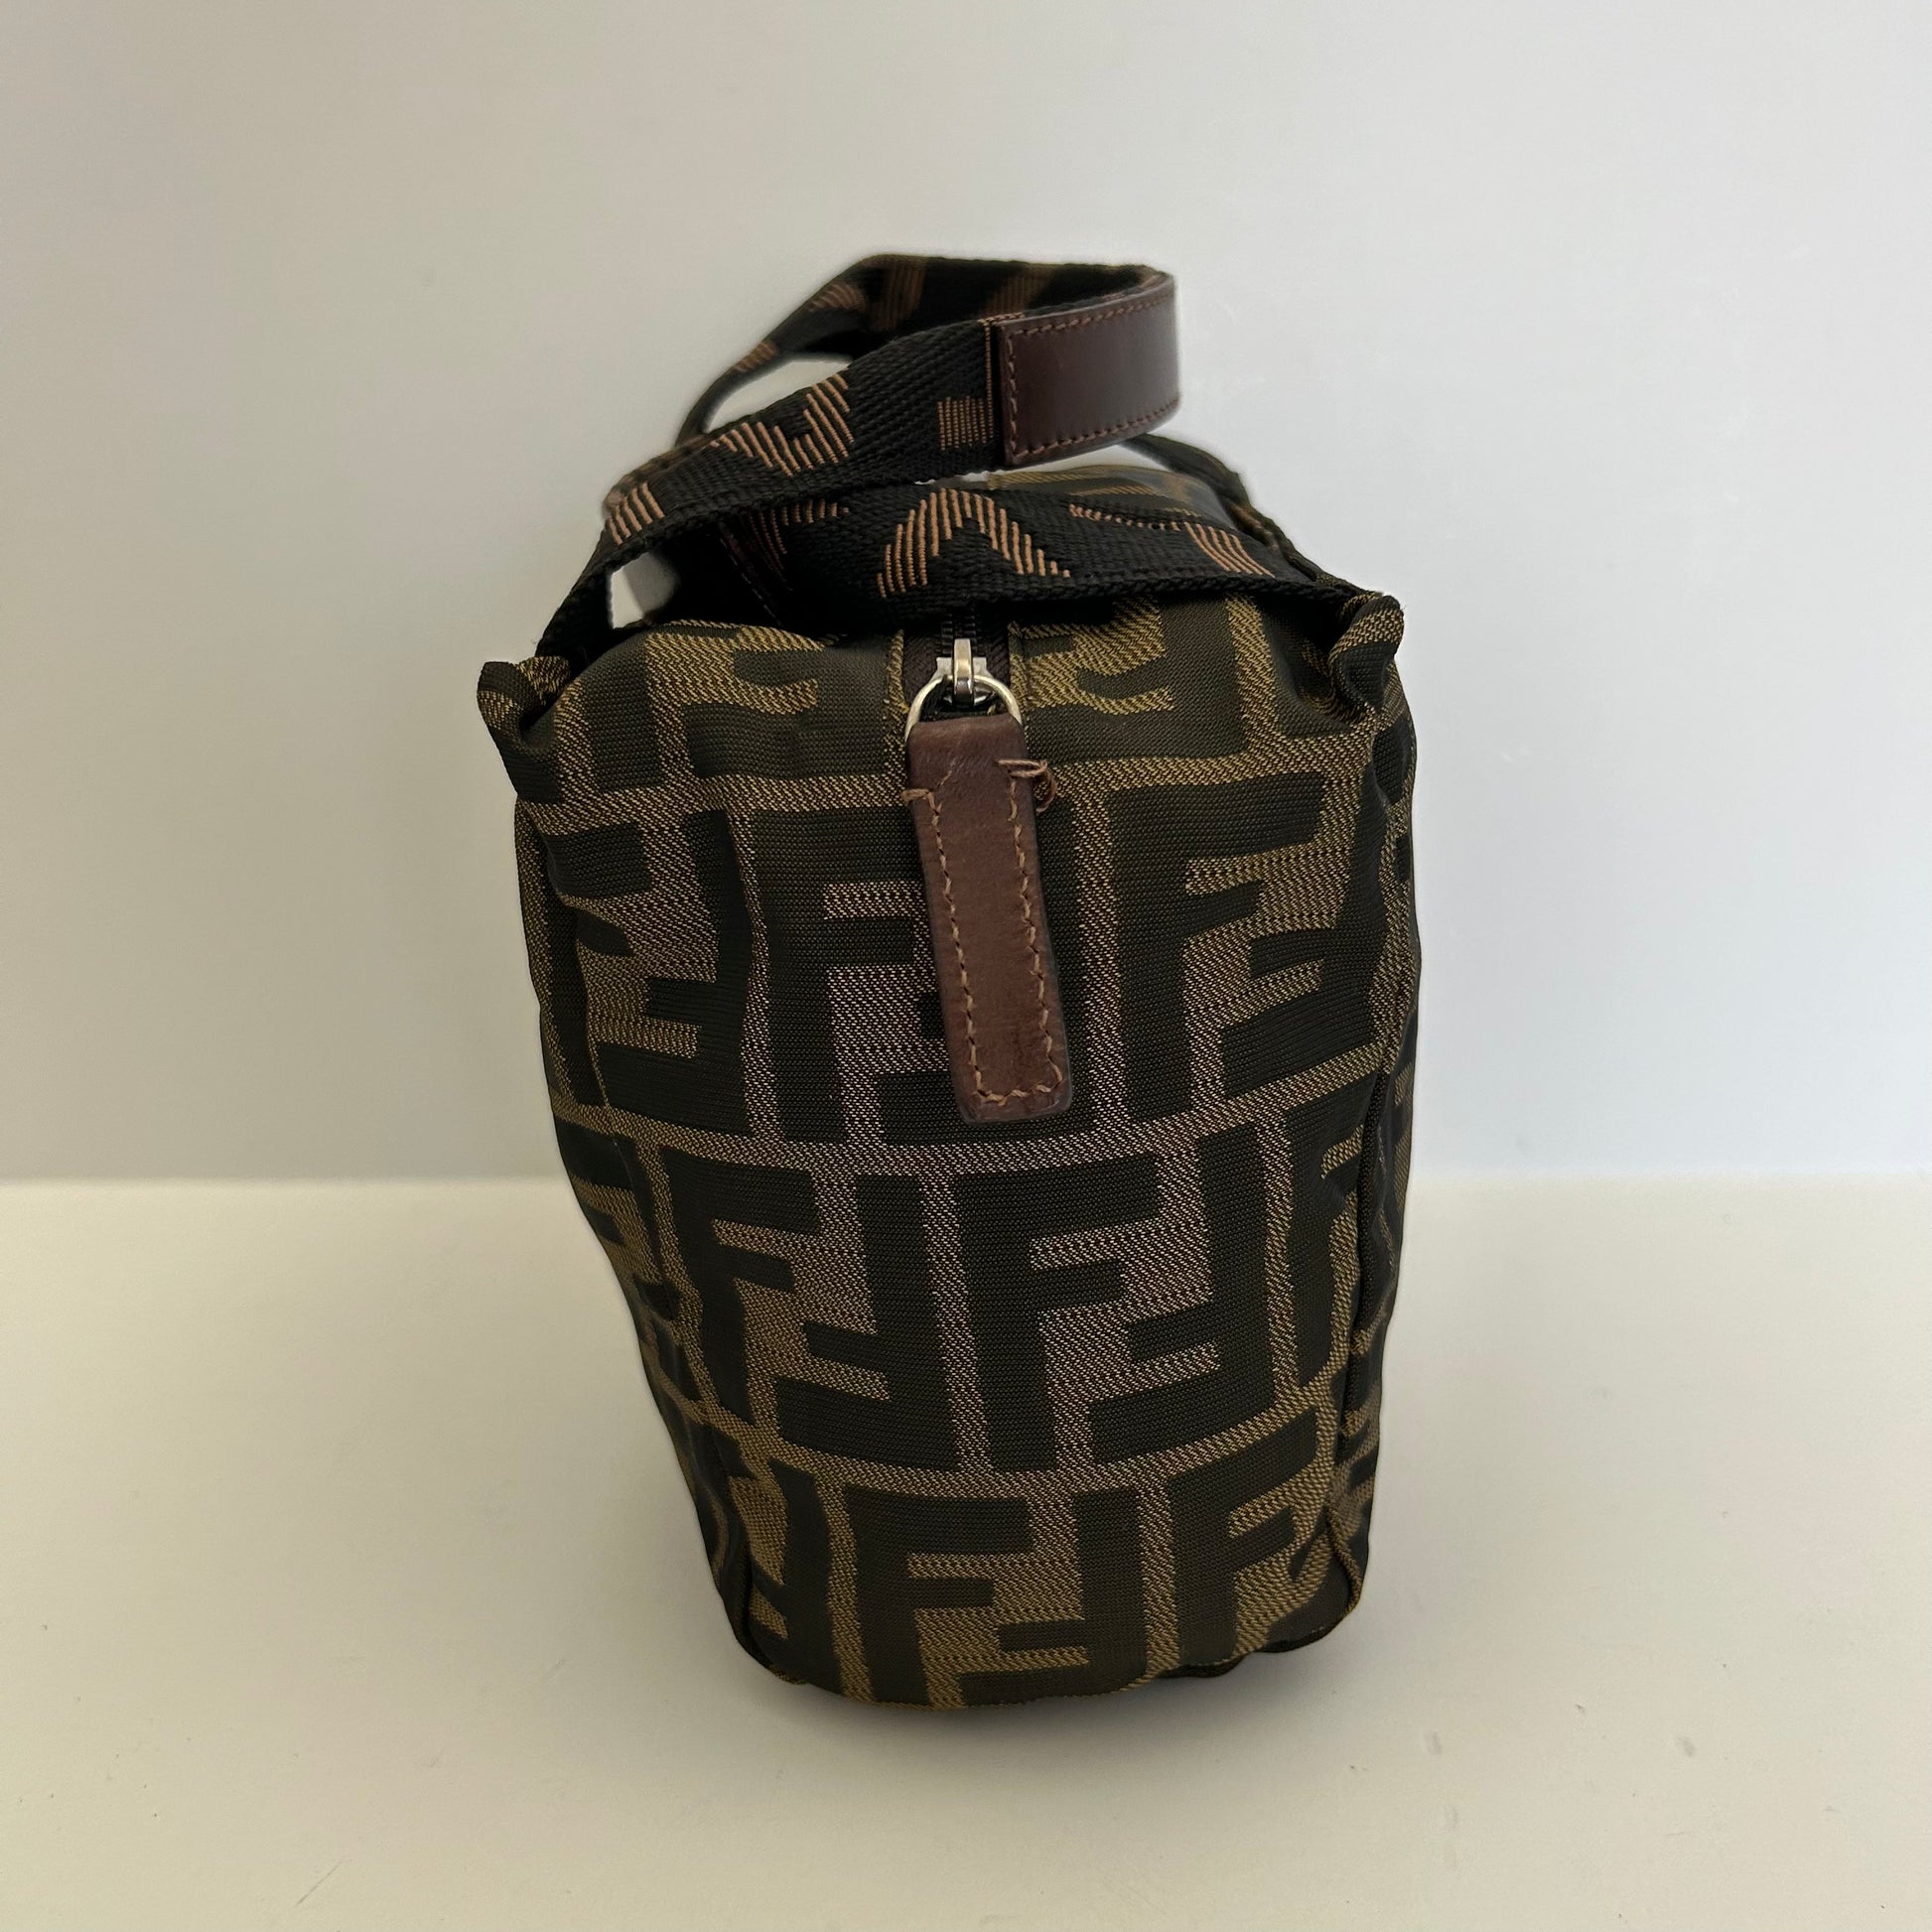 FENDI Zucca Vintage Mini Box Bag